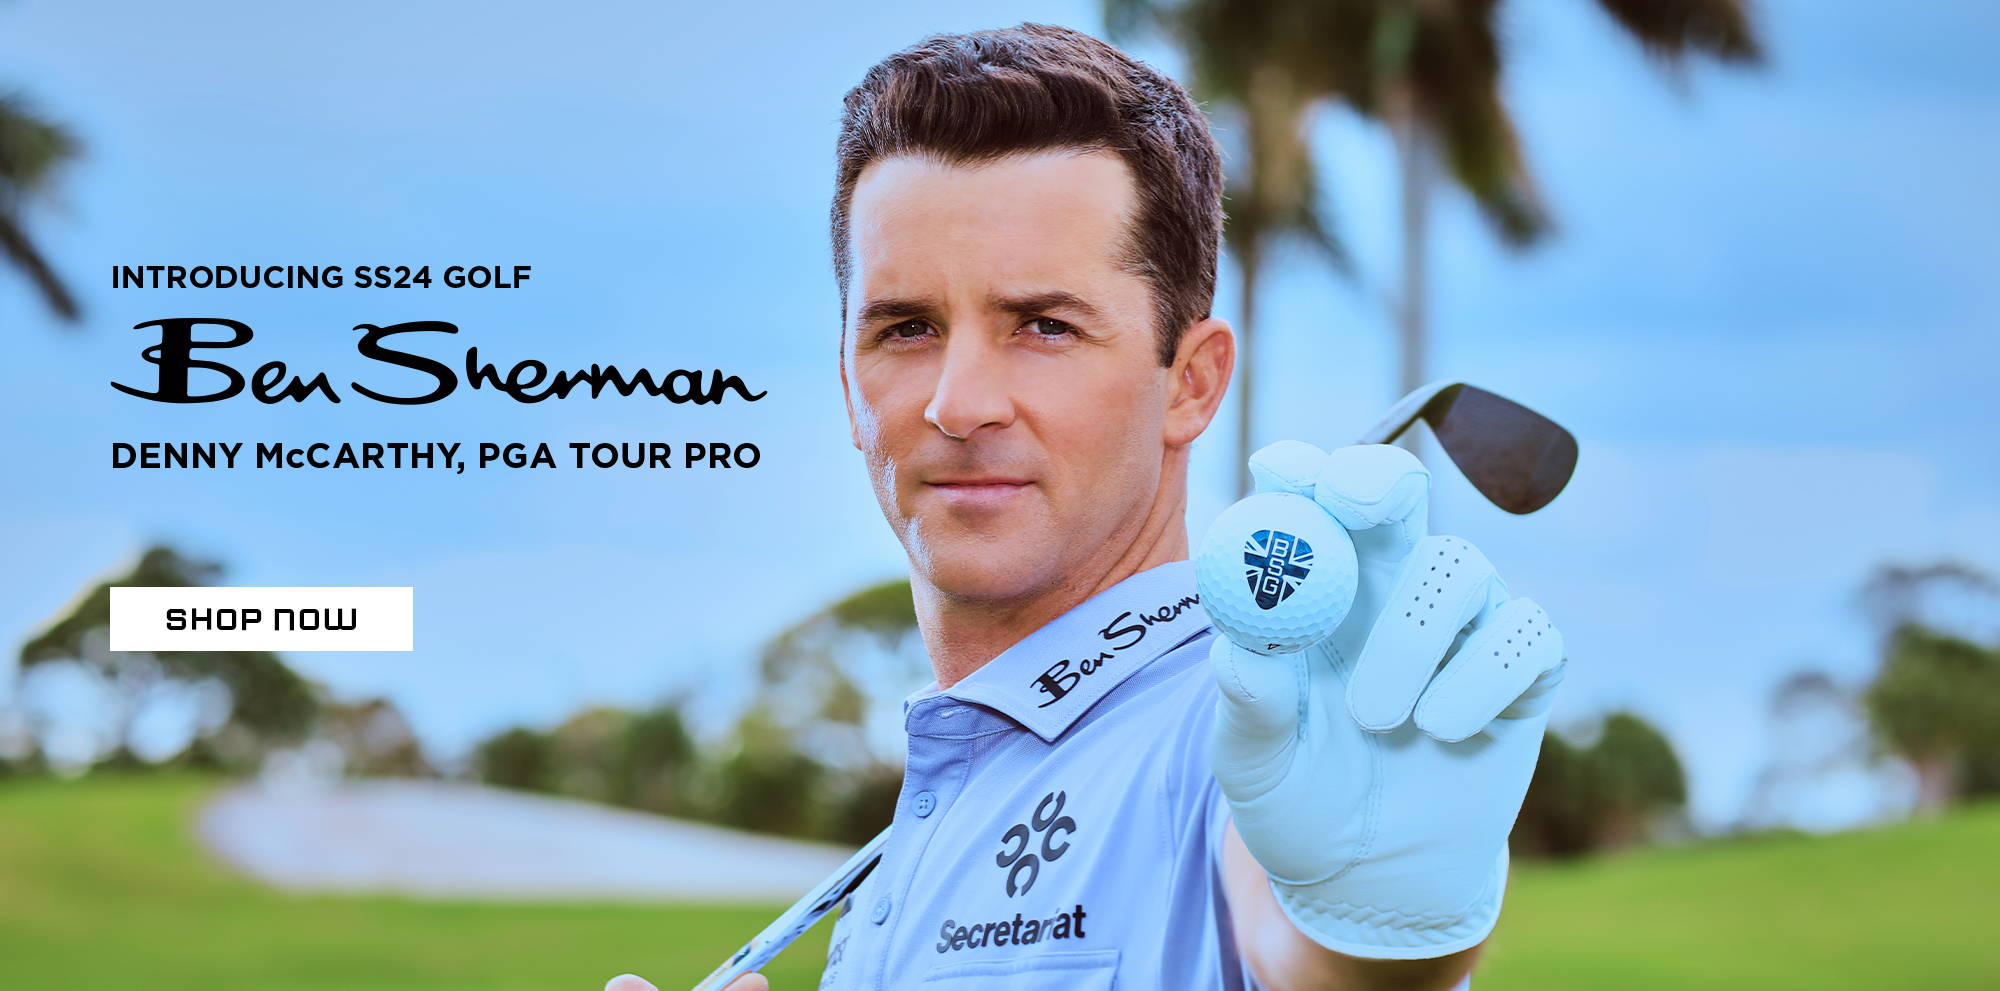 Introducing Ben Sherman SS24 GOLF | Denny McCarthy, PGA Tour Pro